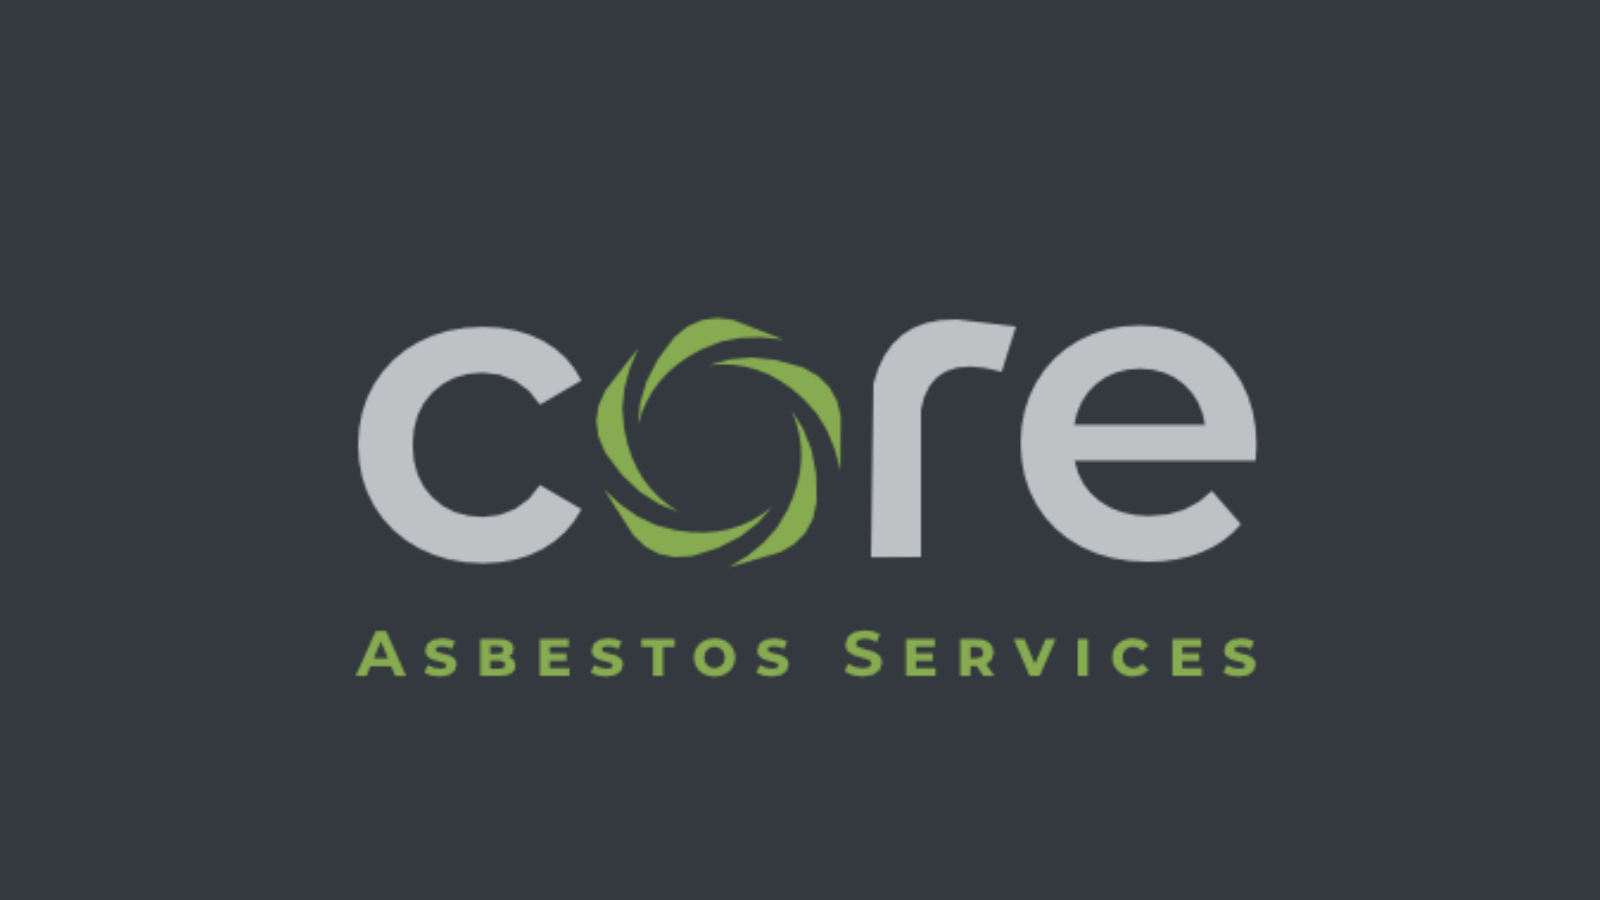 Core Asbestos Services Expands Asbestos Management Solutions in Edinburgh